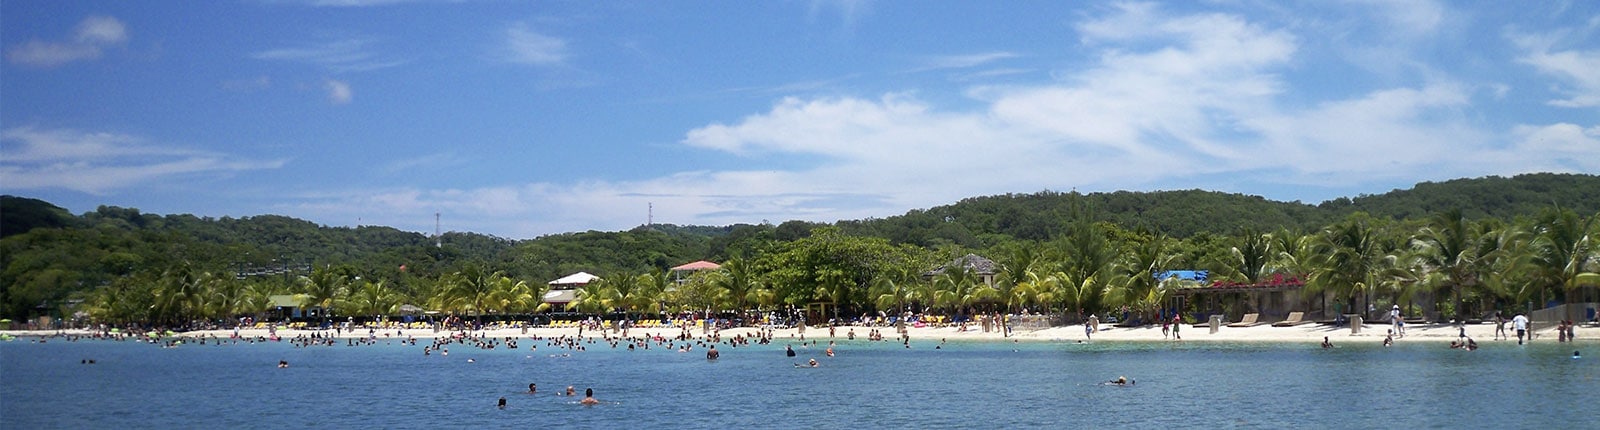 People swimming in the warm blue ocean off the beach in Mahogany Bay, Isla Roatan